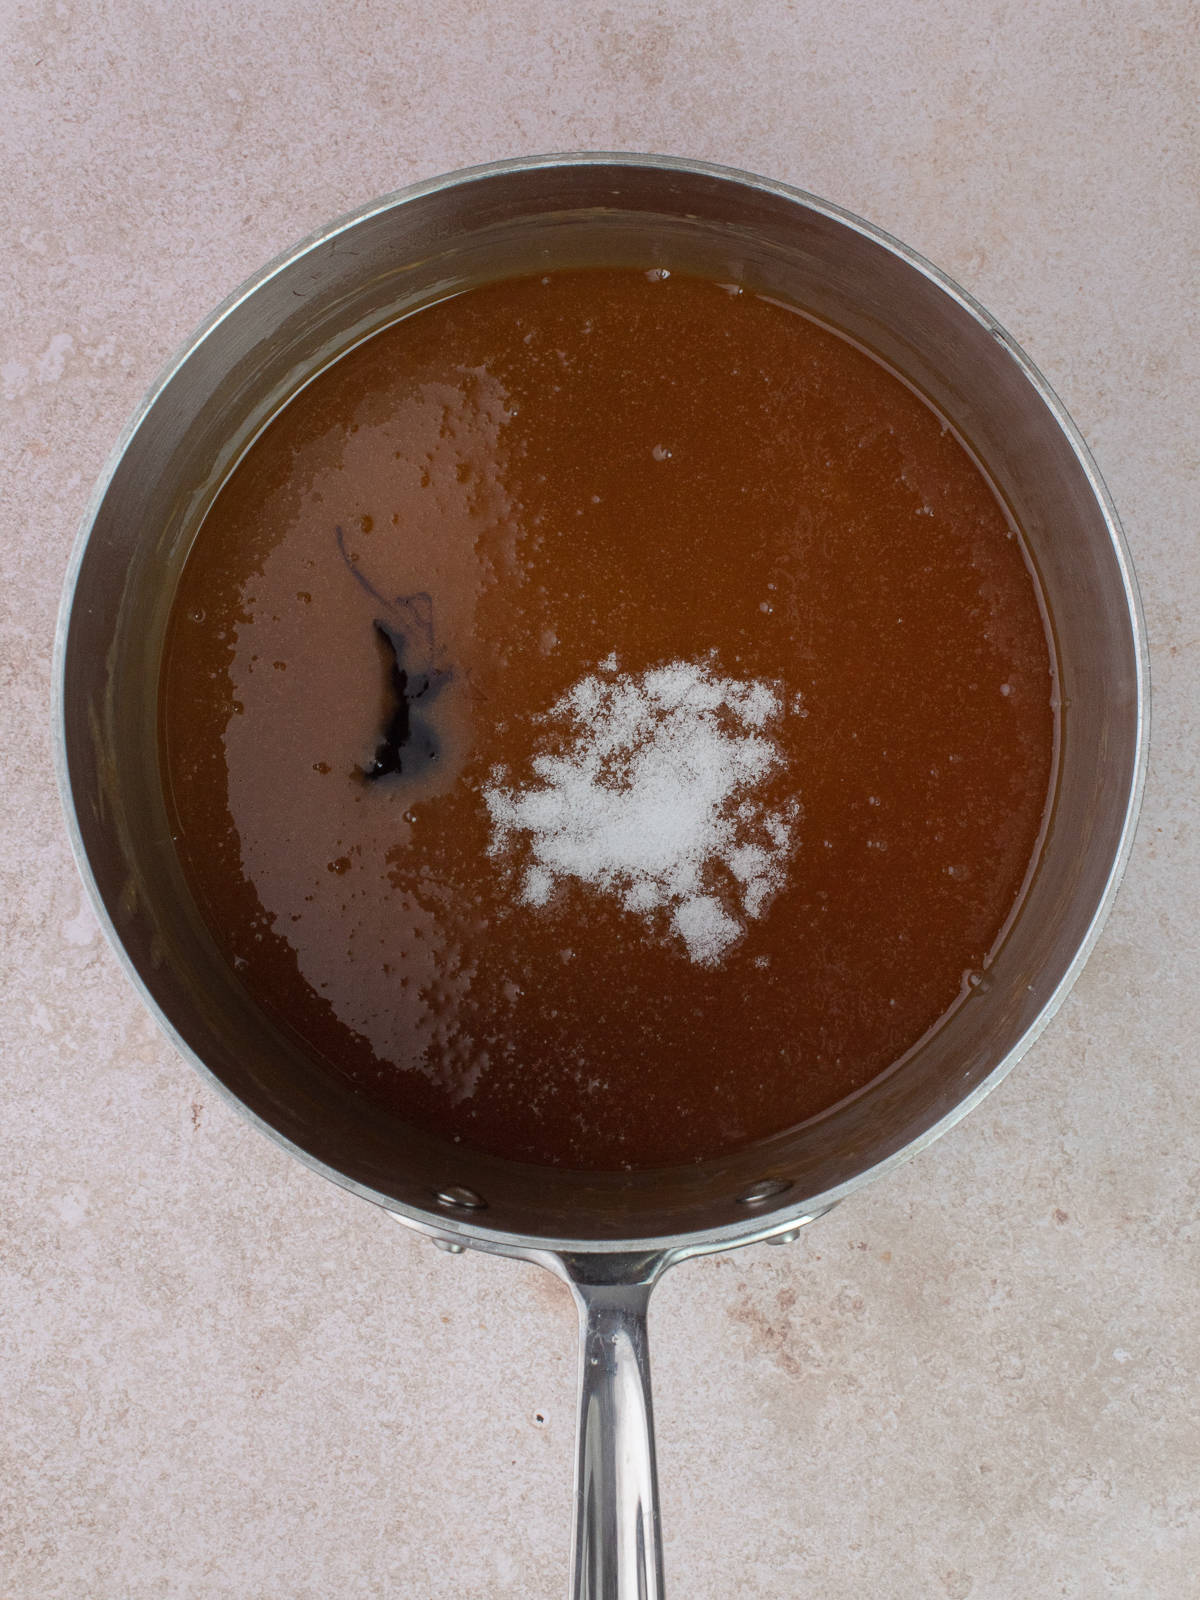 Vanilla and sea salt added to salted caramel